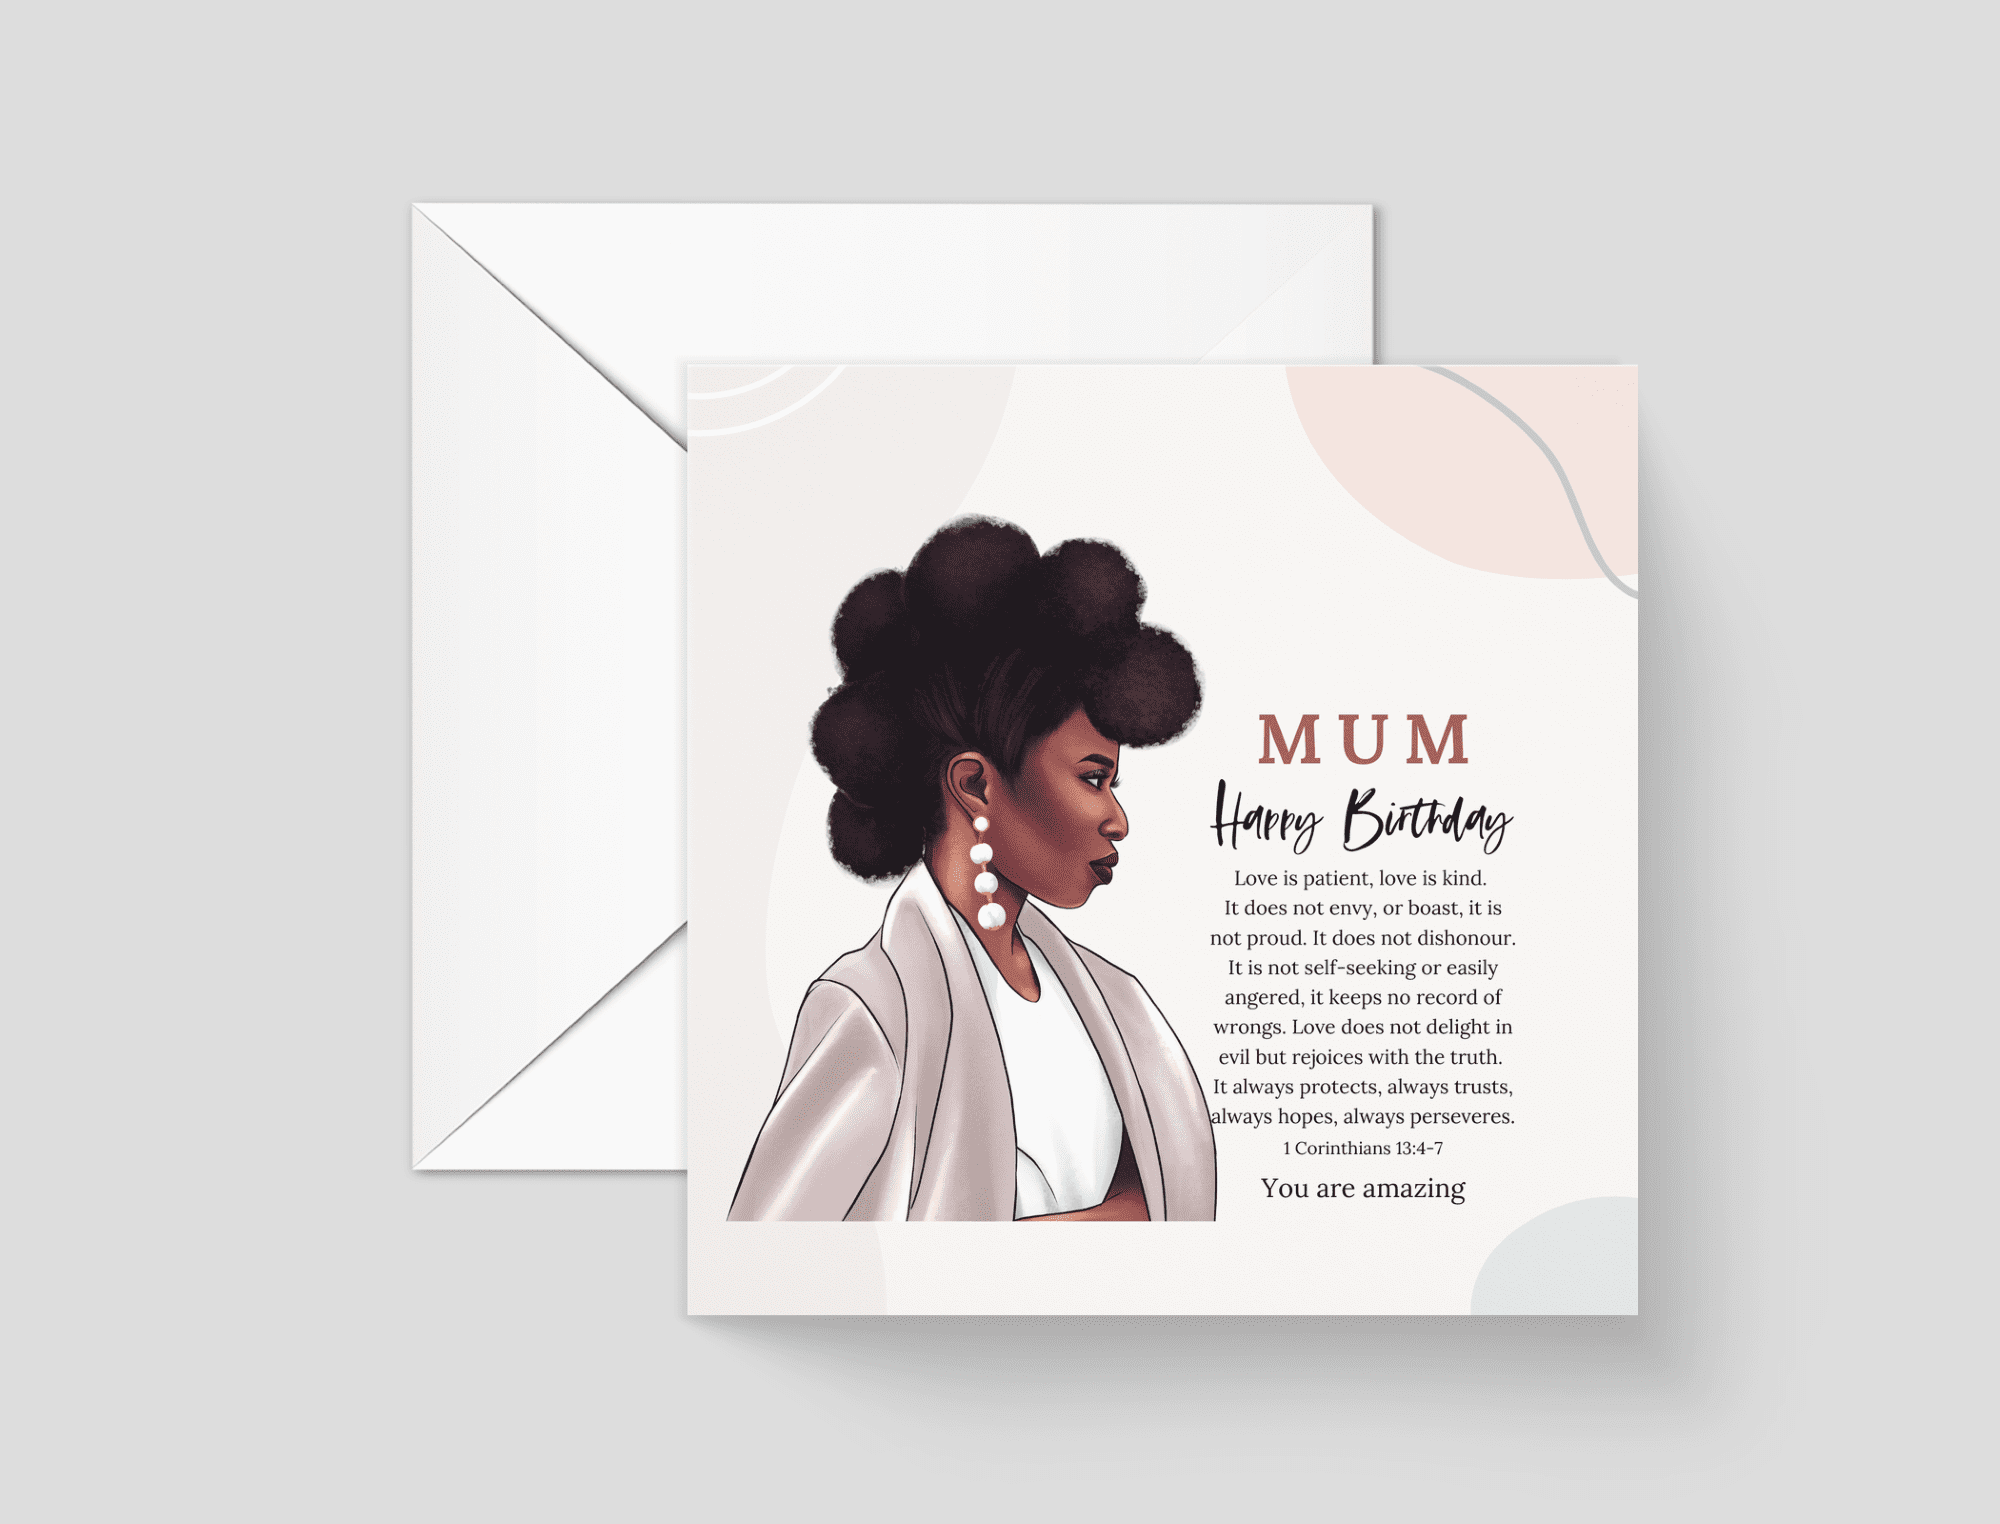 Afro mum birthday card with poem